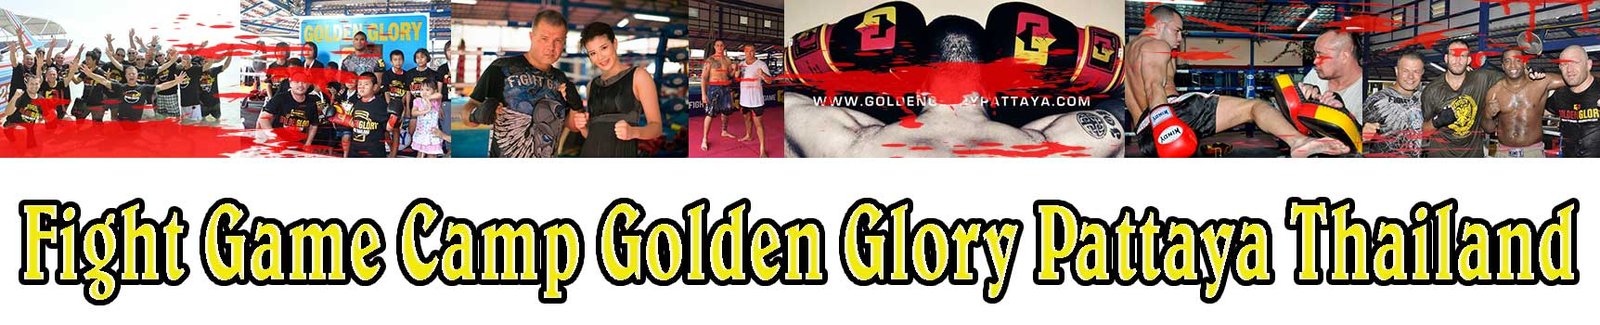 Fight Game Camp Golden Glory Pattaya Thailand